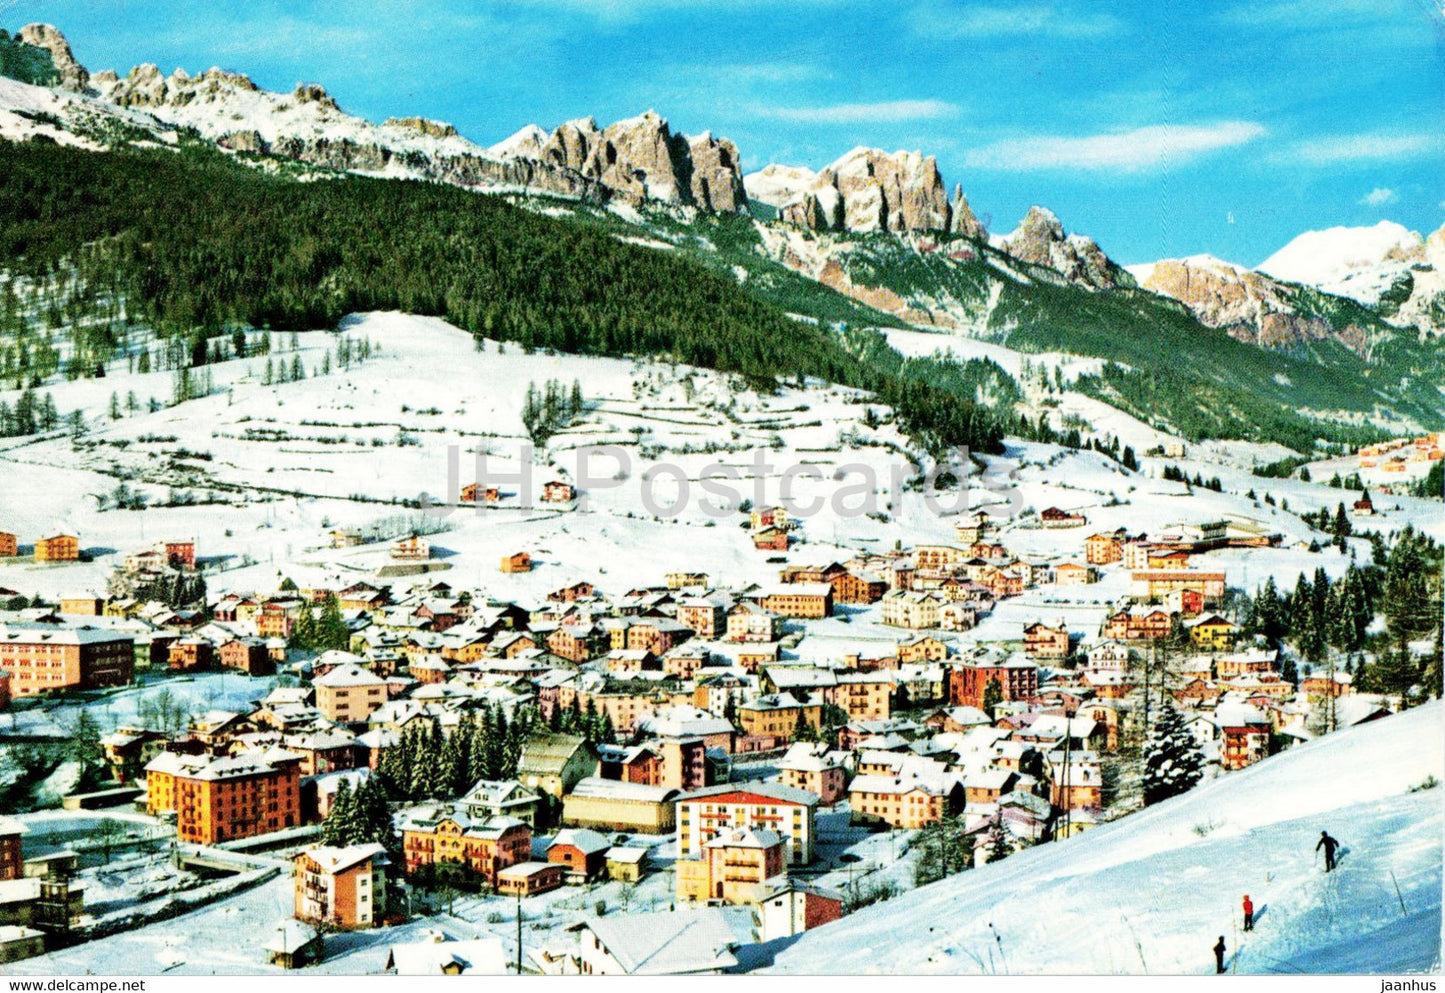 Dolomiti - Moena 1200 m - Panorama - General View - 4604 - 1969 - Italy - used - JH Postcards